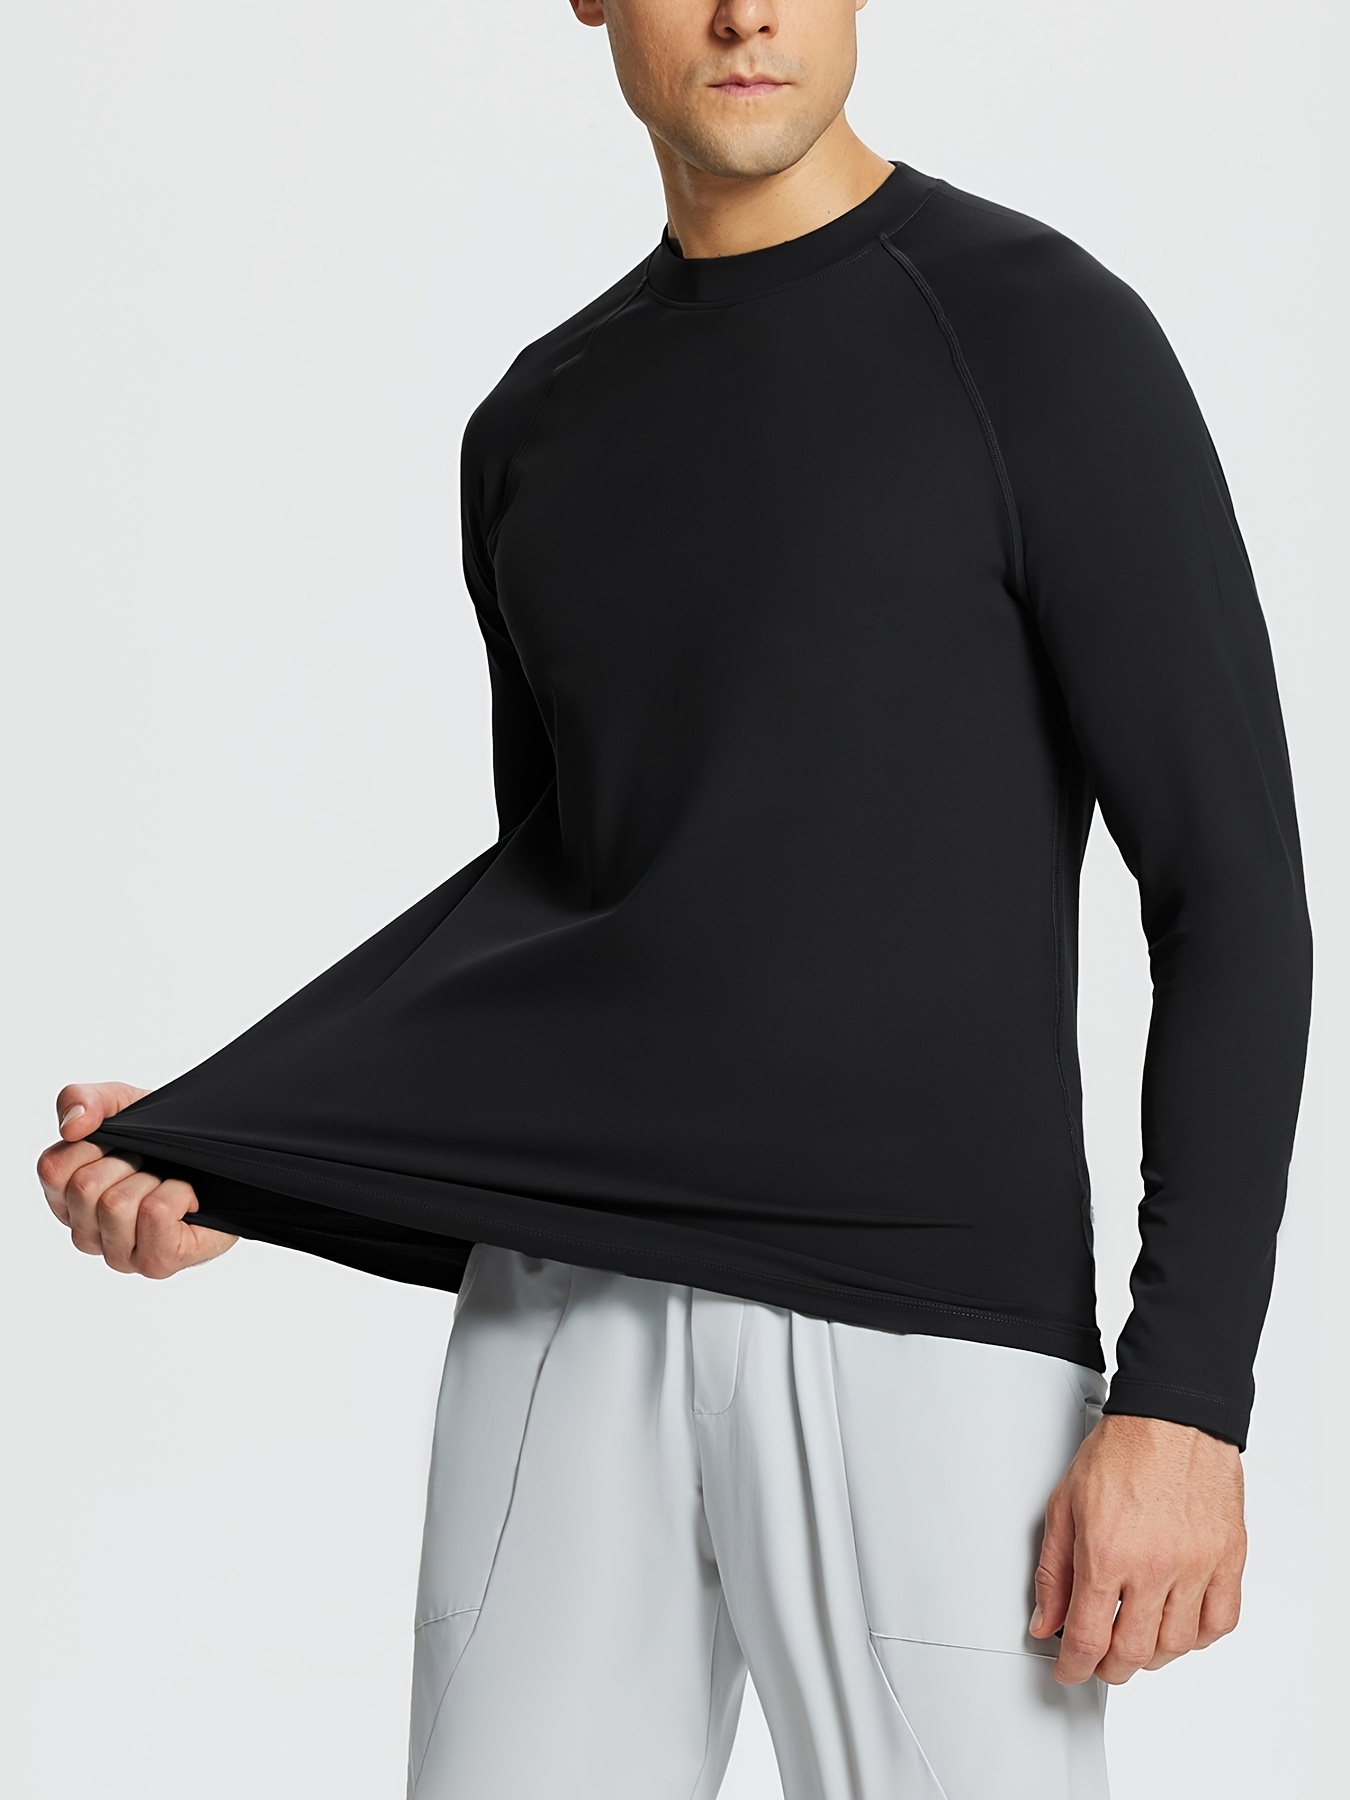 BALEAF Women's Fleece Thermal Long Sleeve Running Shirt